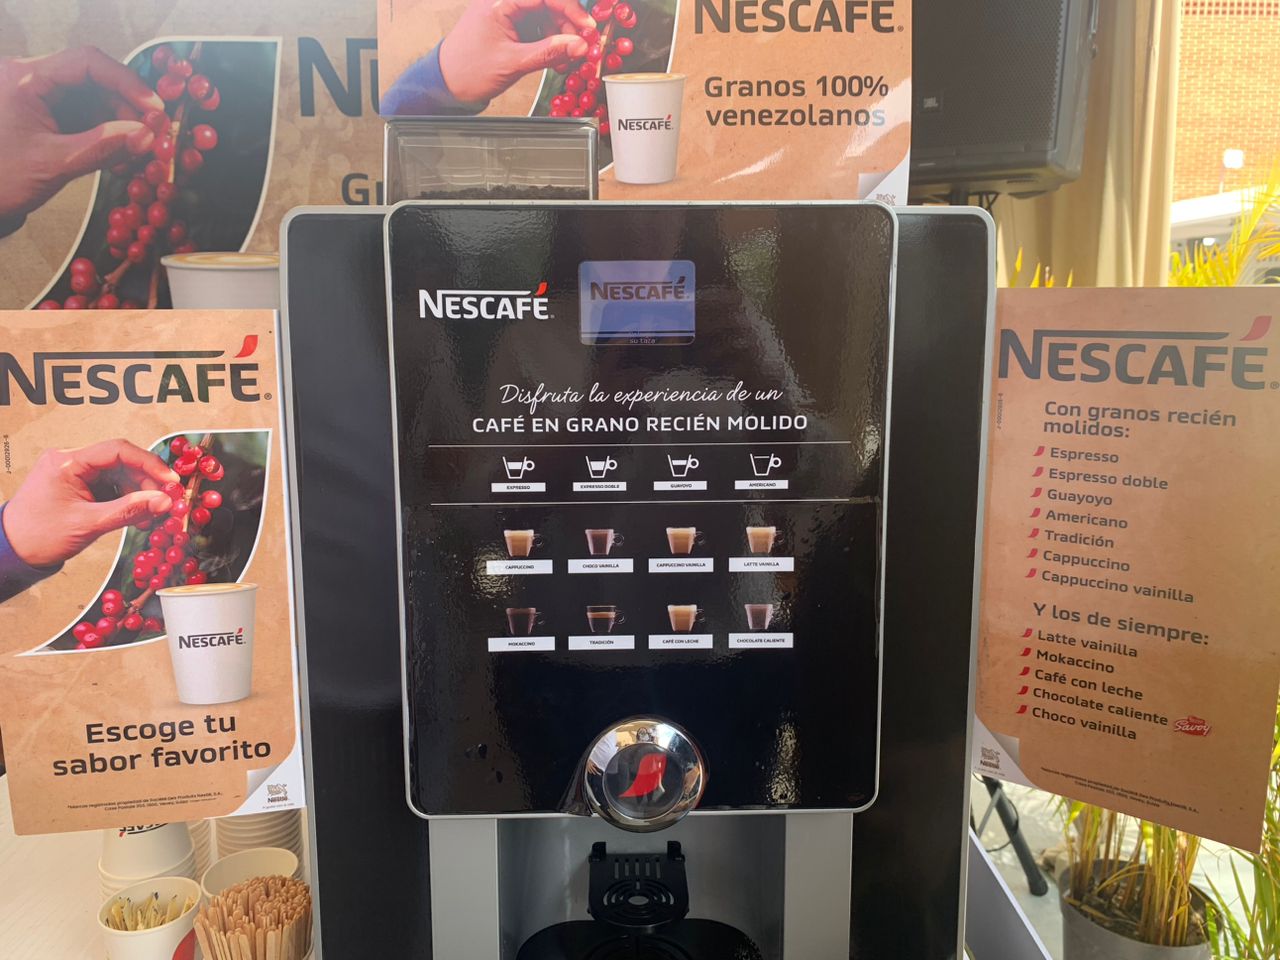 Máquina de vending de café, ¿qué tipos de café ofrece?